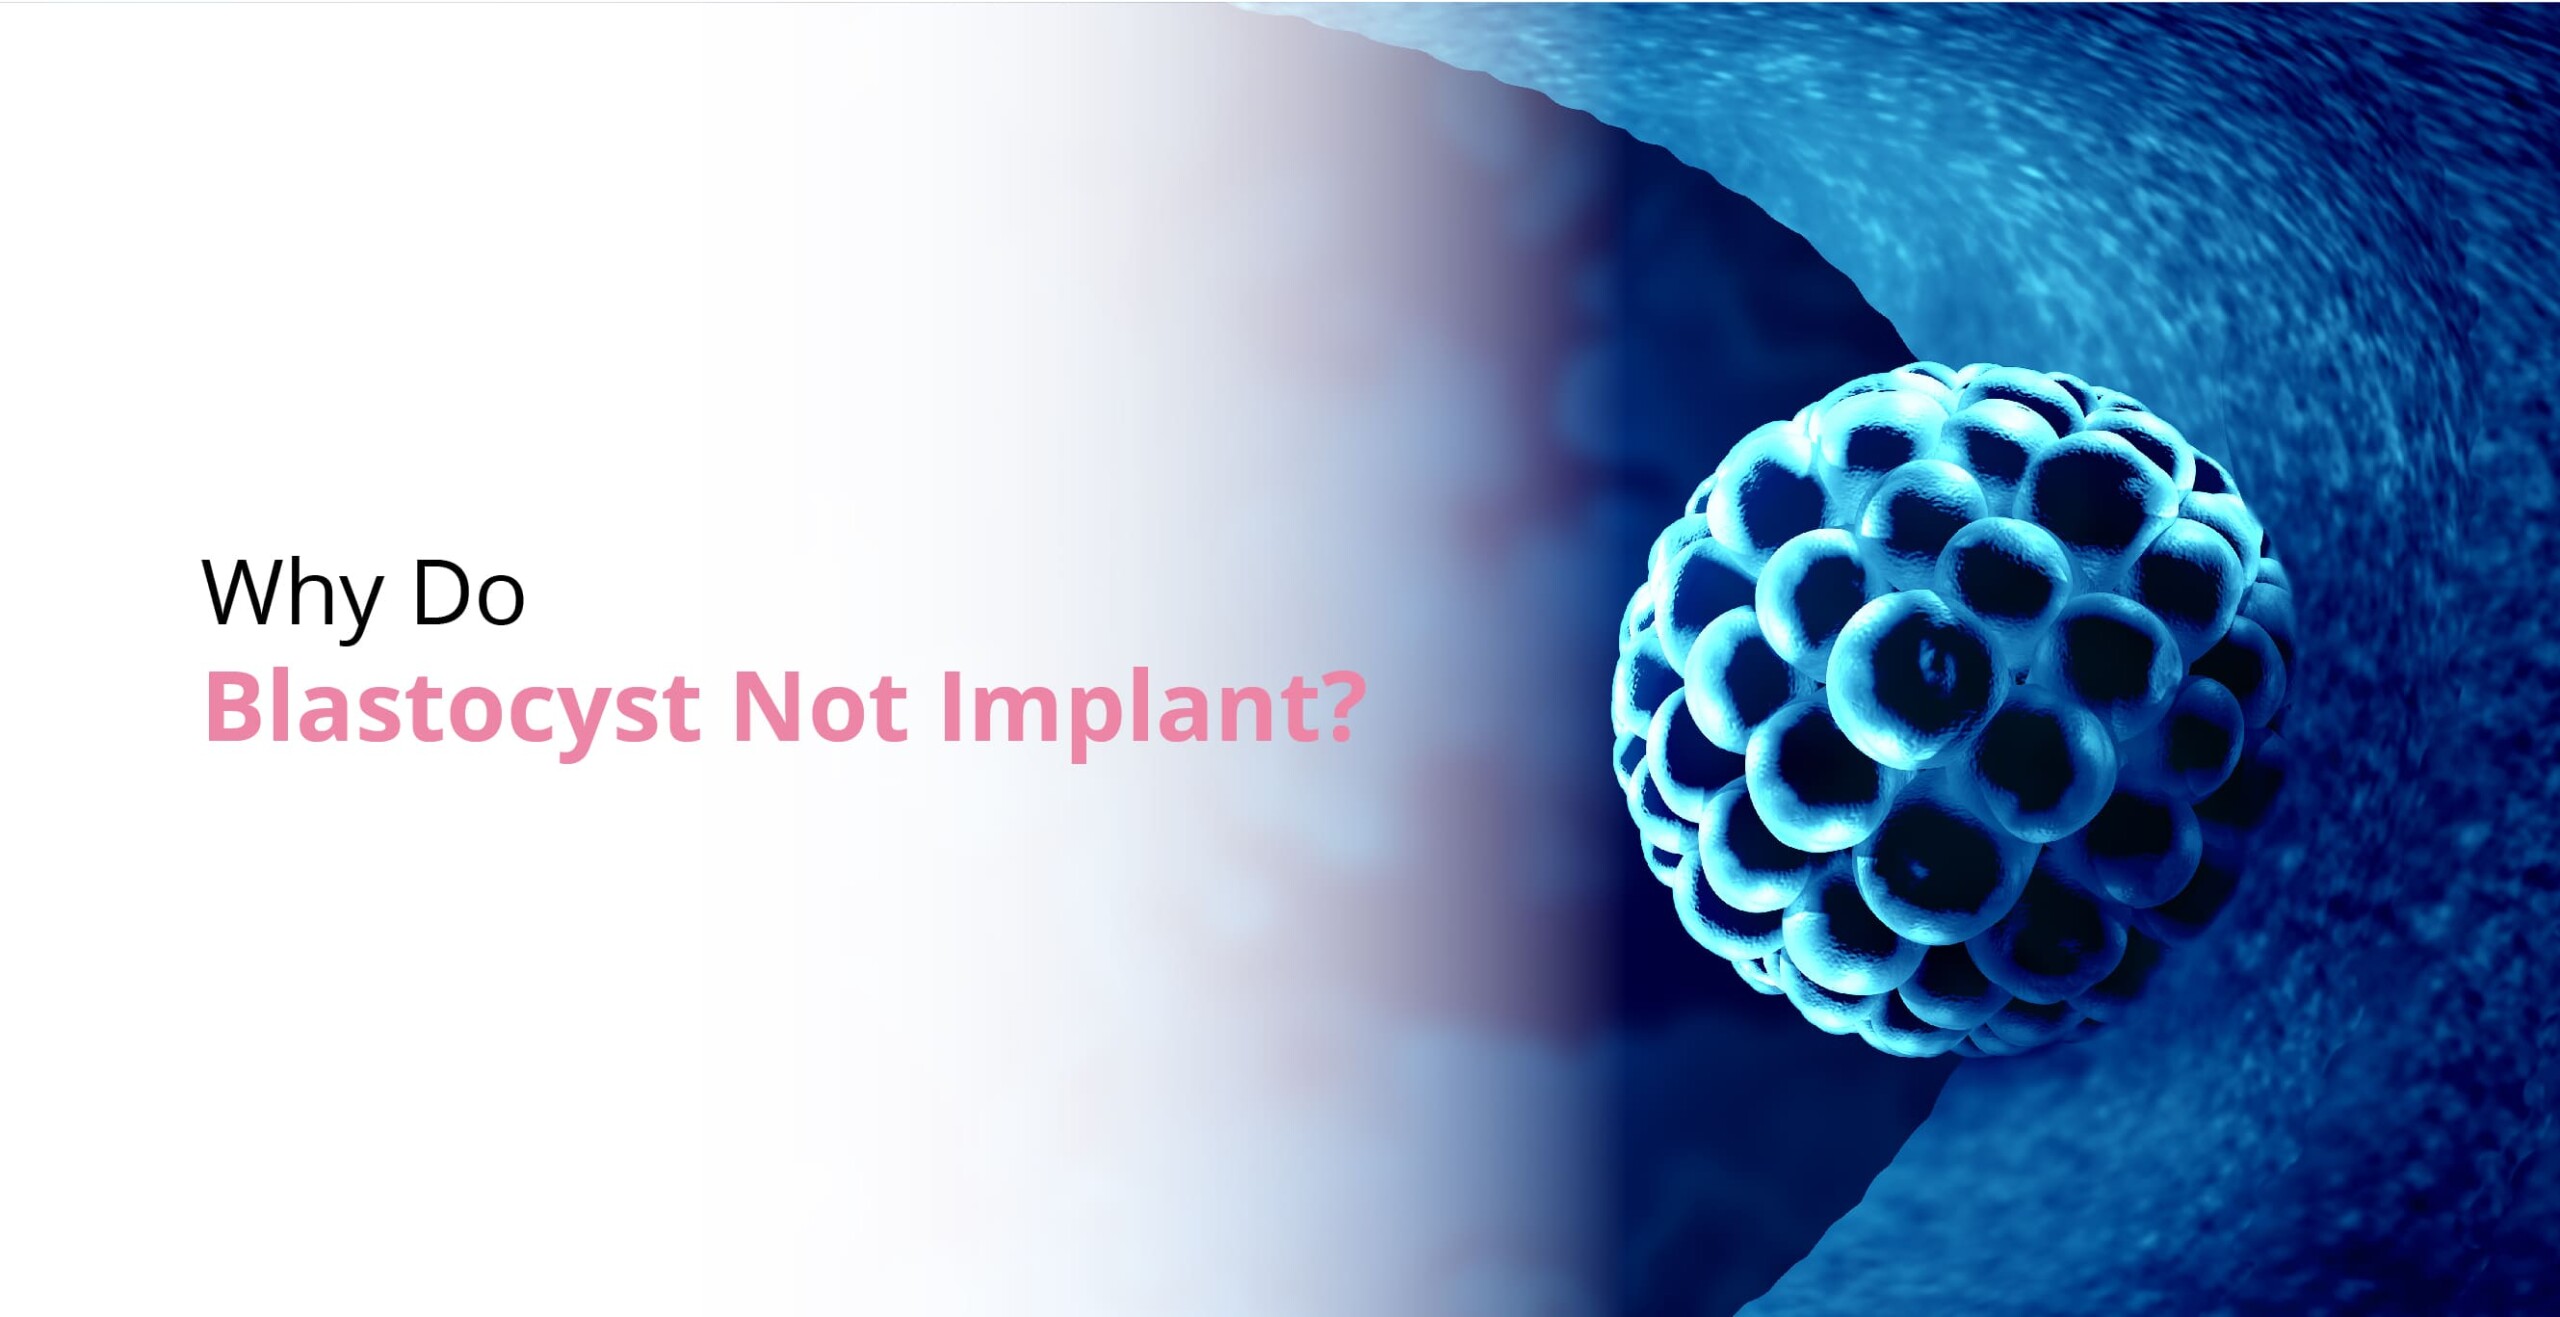 Why do Blastocyst not Implant